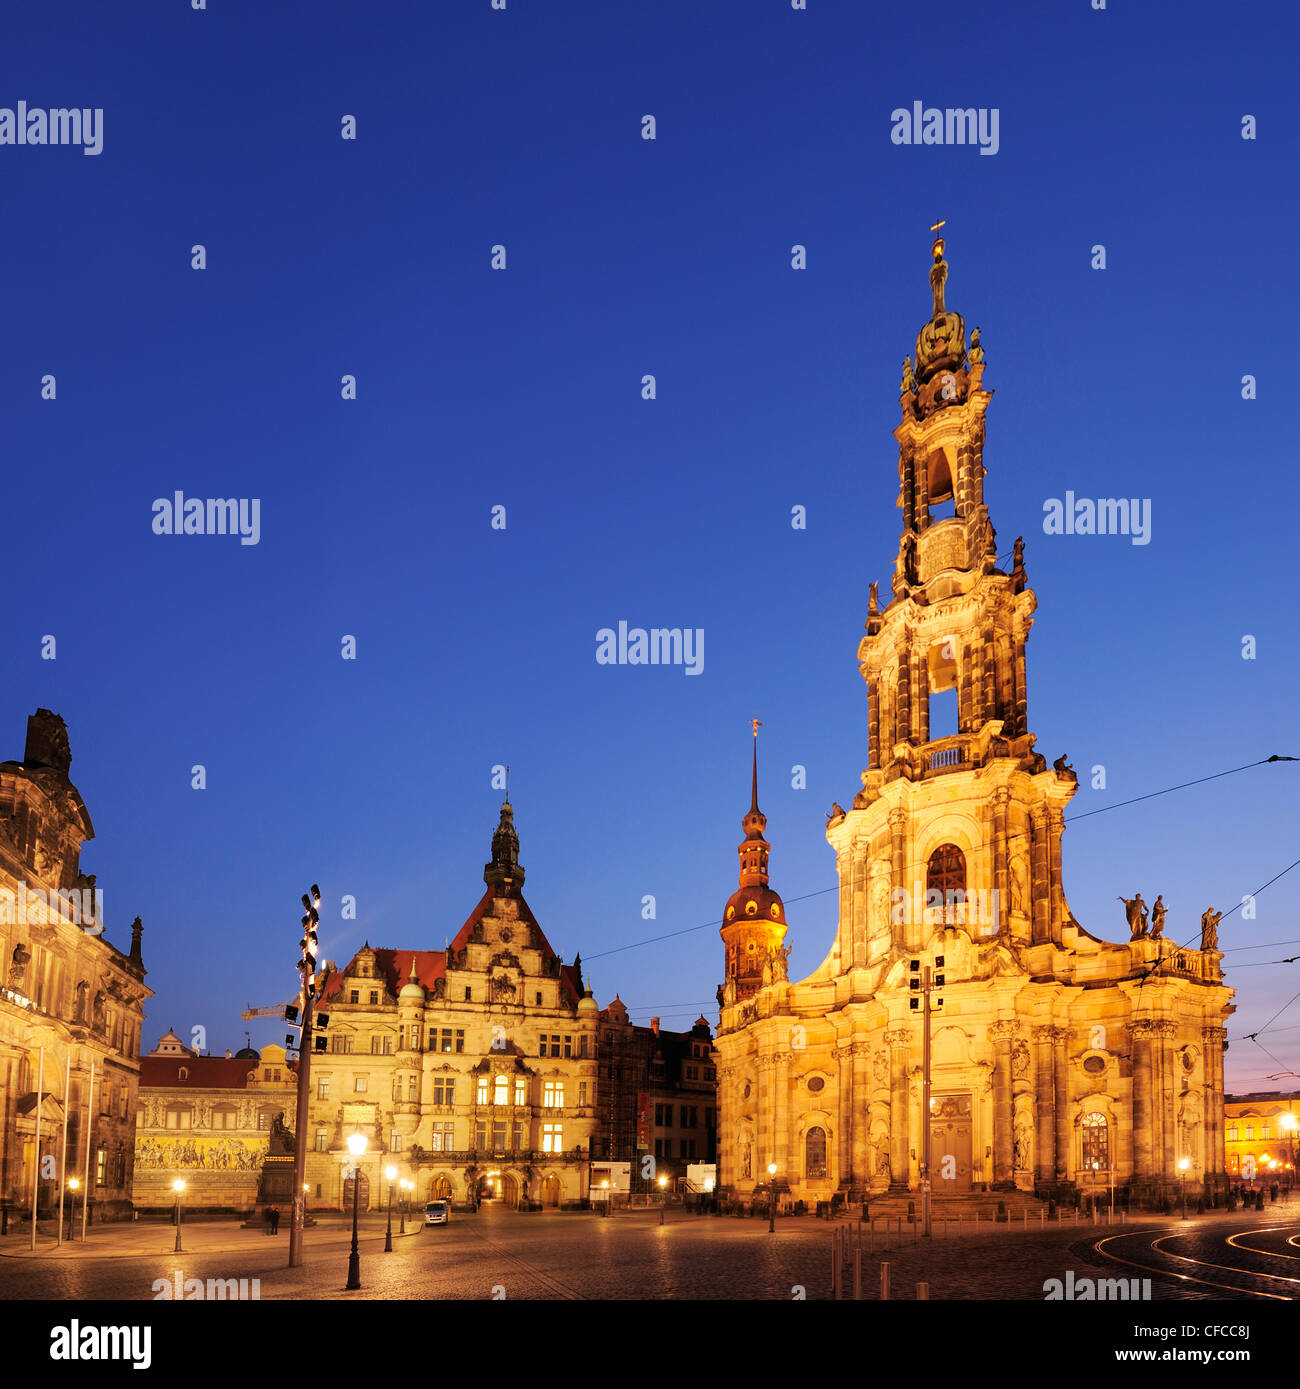 Illuminated Schlossplatz with Staendehaus, castle and cathedral, Schlossplatz, Dresden, Saxony, Germany, Europe Stock Photo